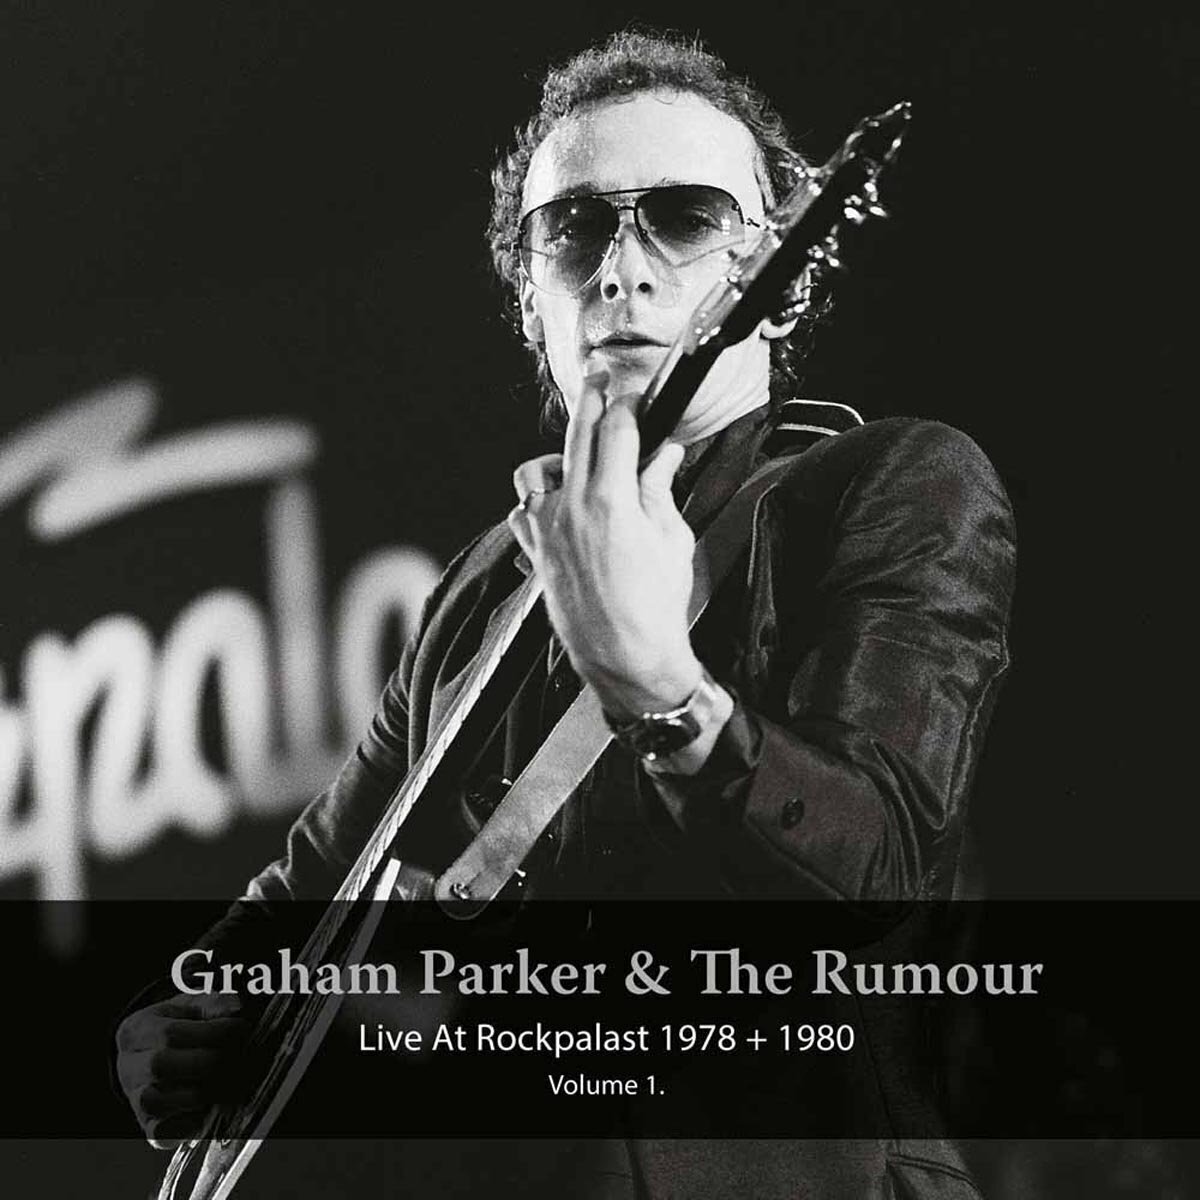 Vinyl Record Graham Parker & The Rumour - Live At Rockpalast 1978 + 1980 Vol 1 (2 LP)